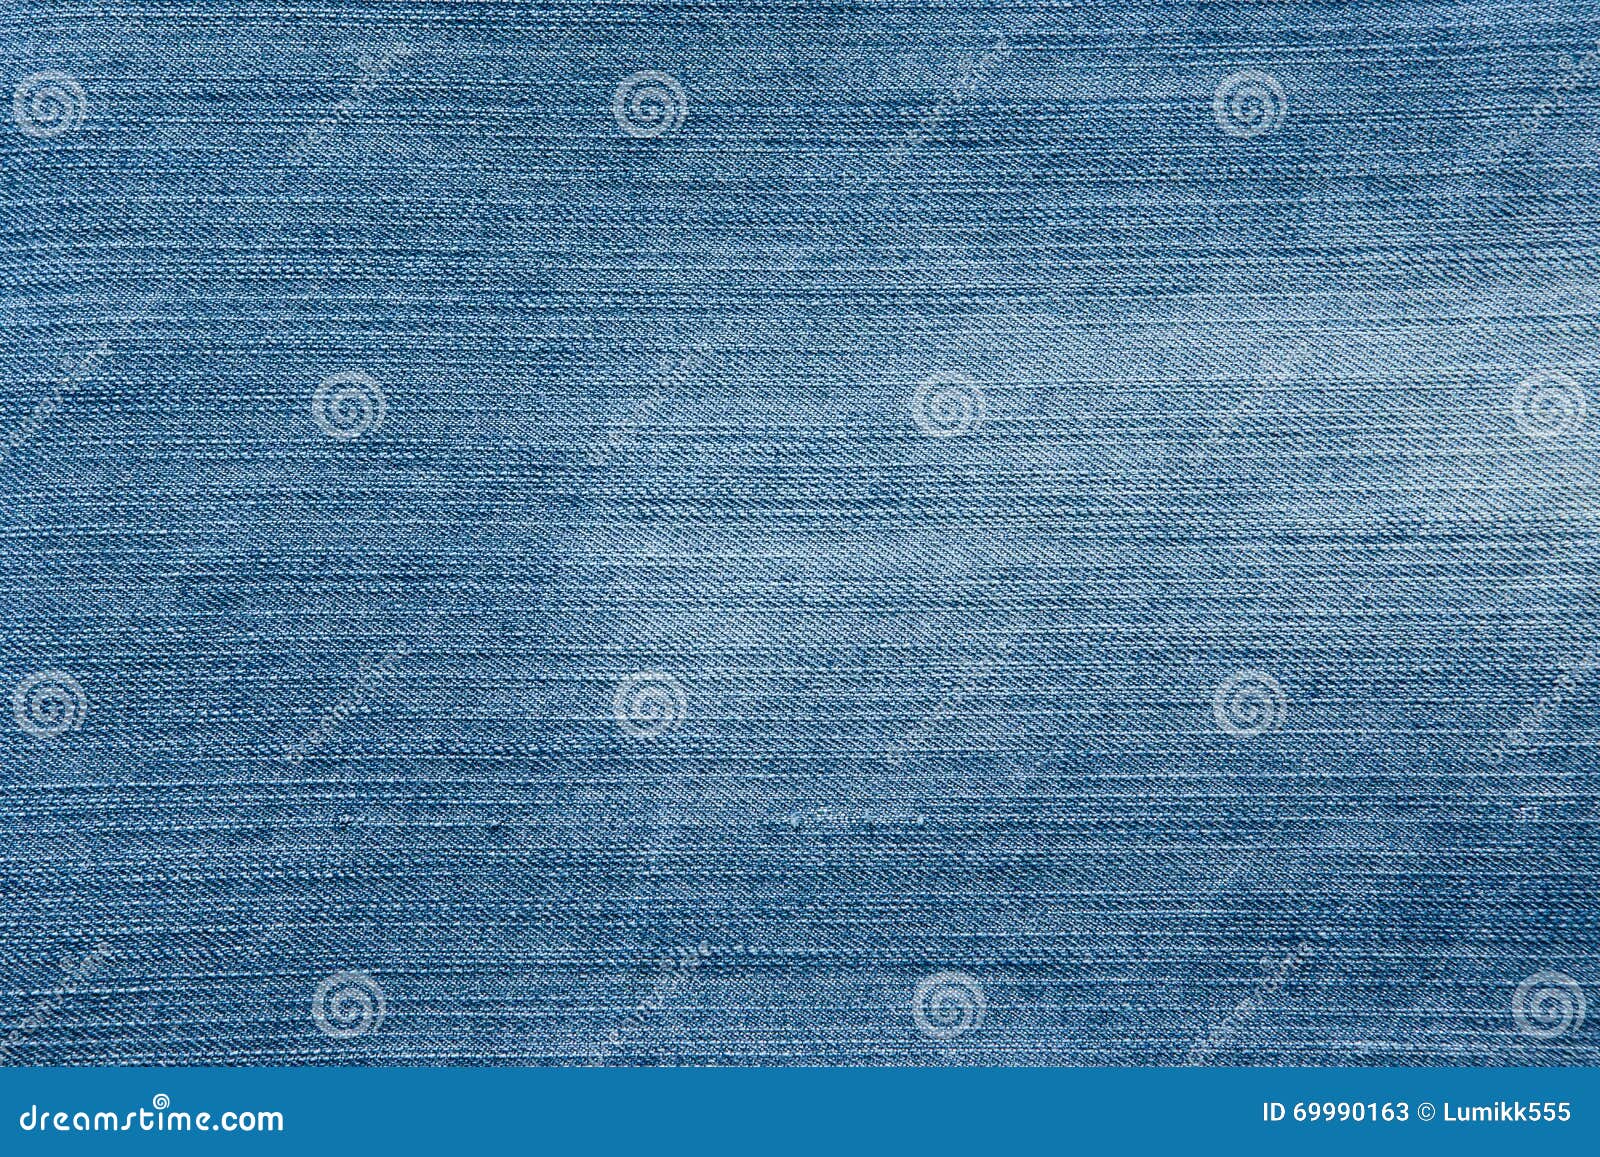 Dark Blue Washed Faded Denim Fabric Stock Photo 385264948 | Shutterstock